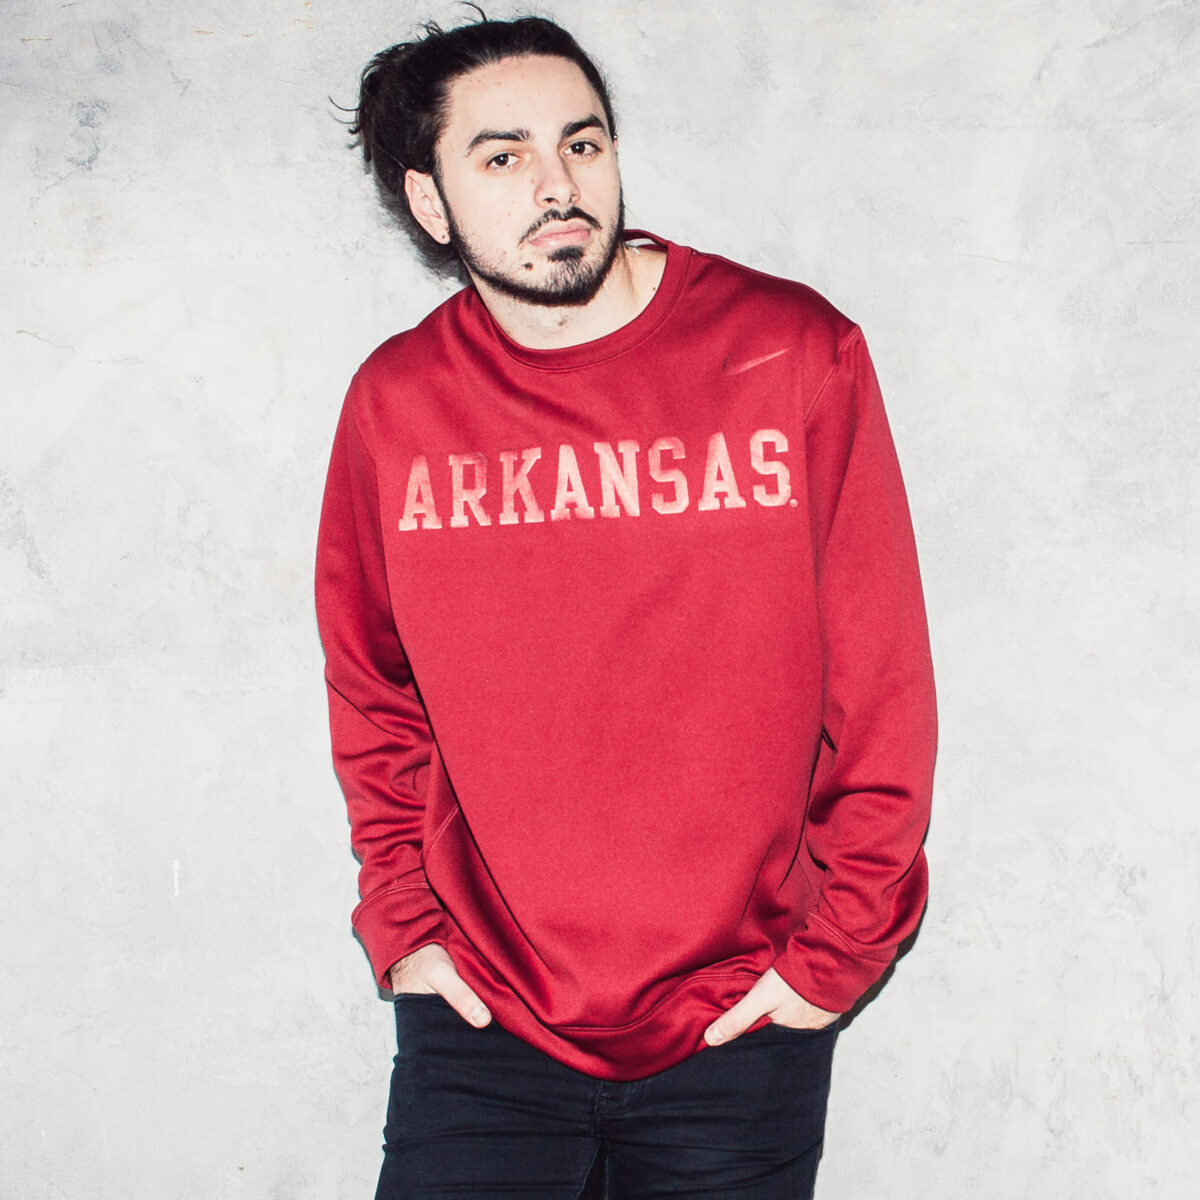 Nike Therma Fit Arkansas College Sweatshirt 54 Euro